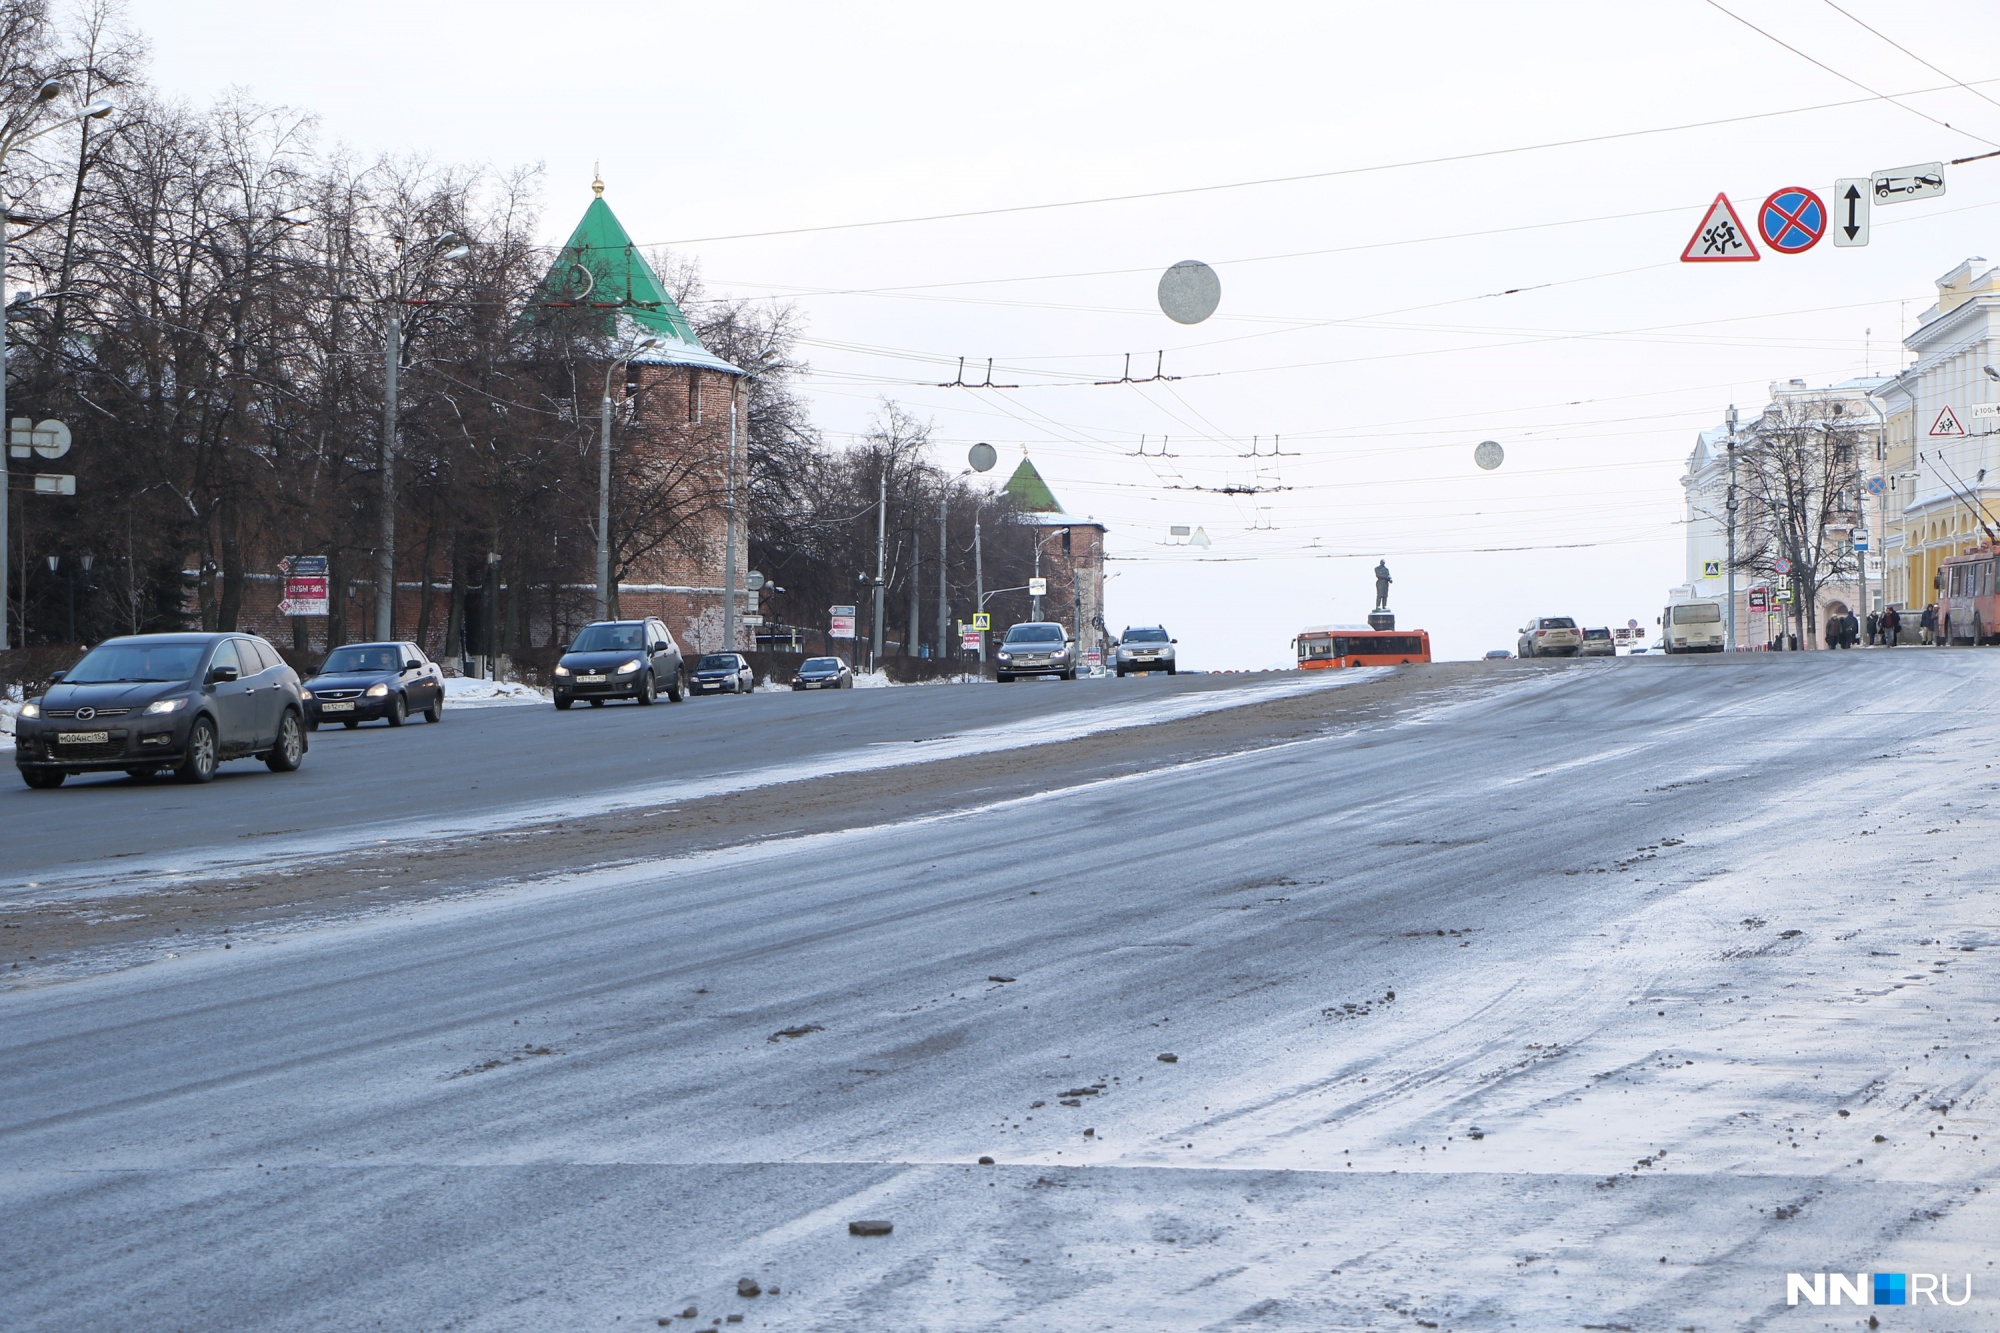 Из-за новогодних мероприятий центр Нижнего Новгорода перекроют до середины января